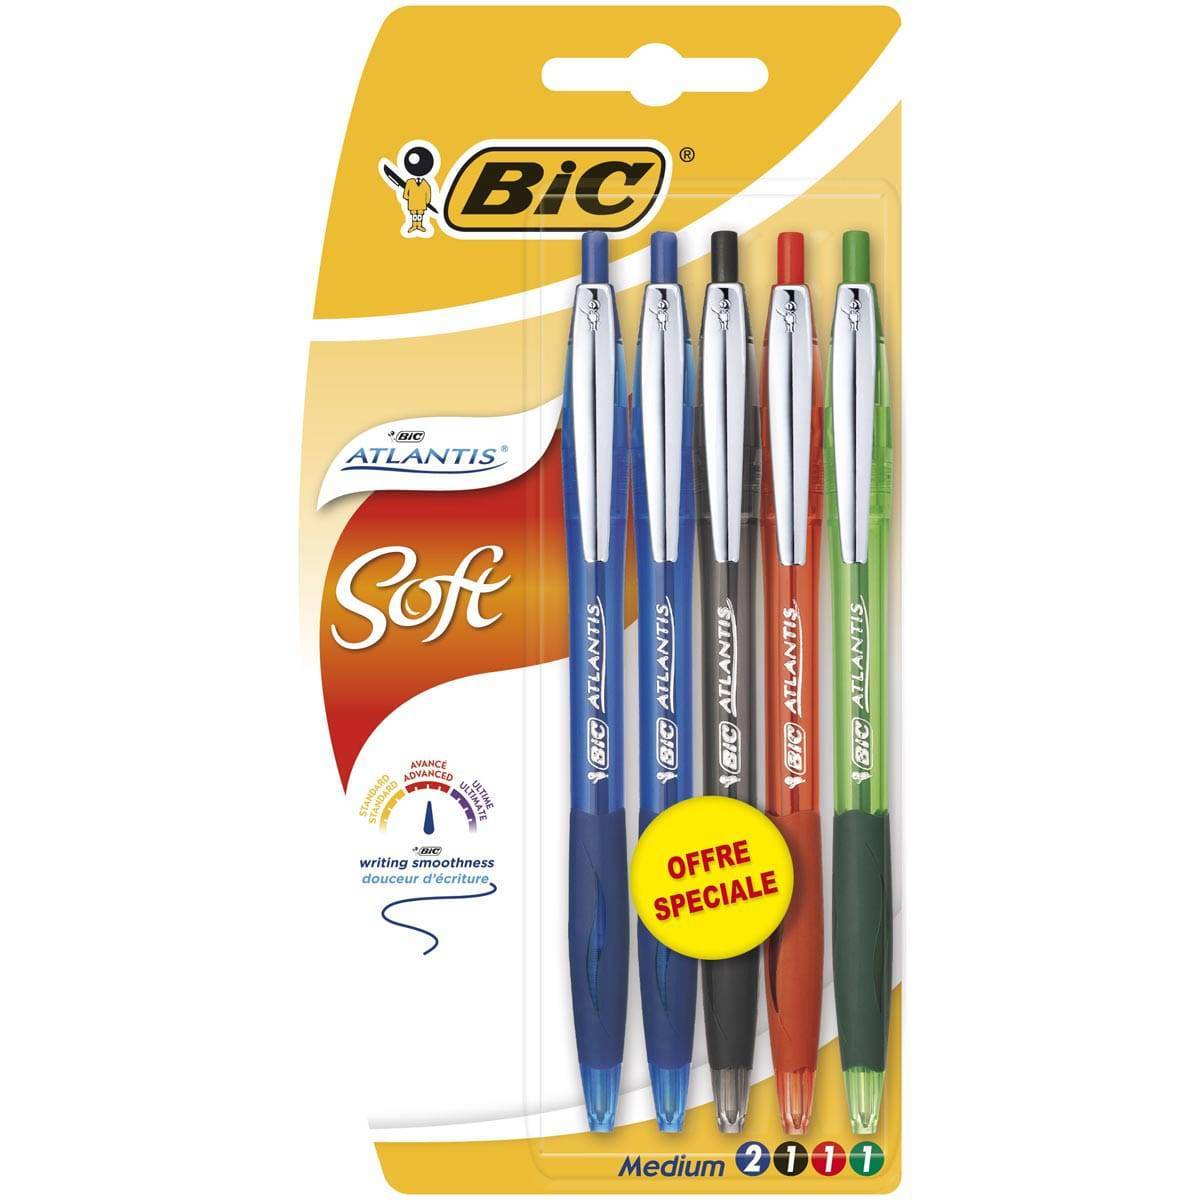 5 Atlantis soft assorted BIC ballpoint pens